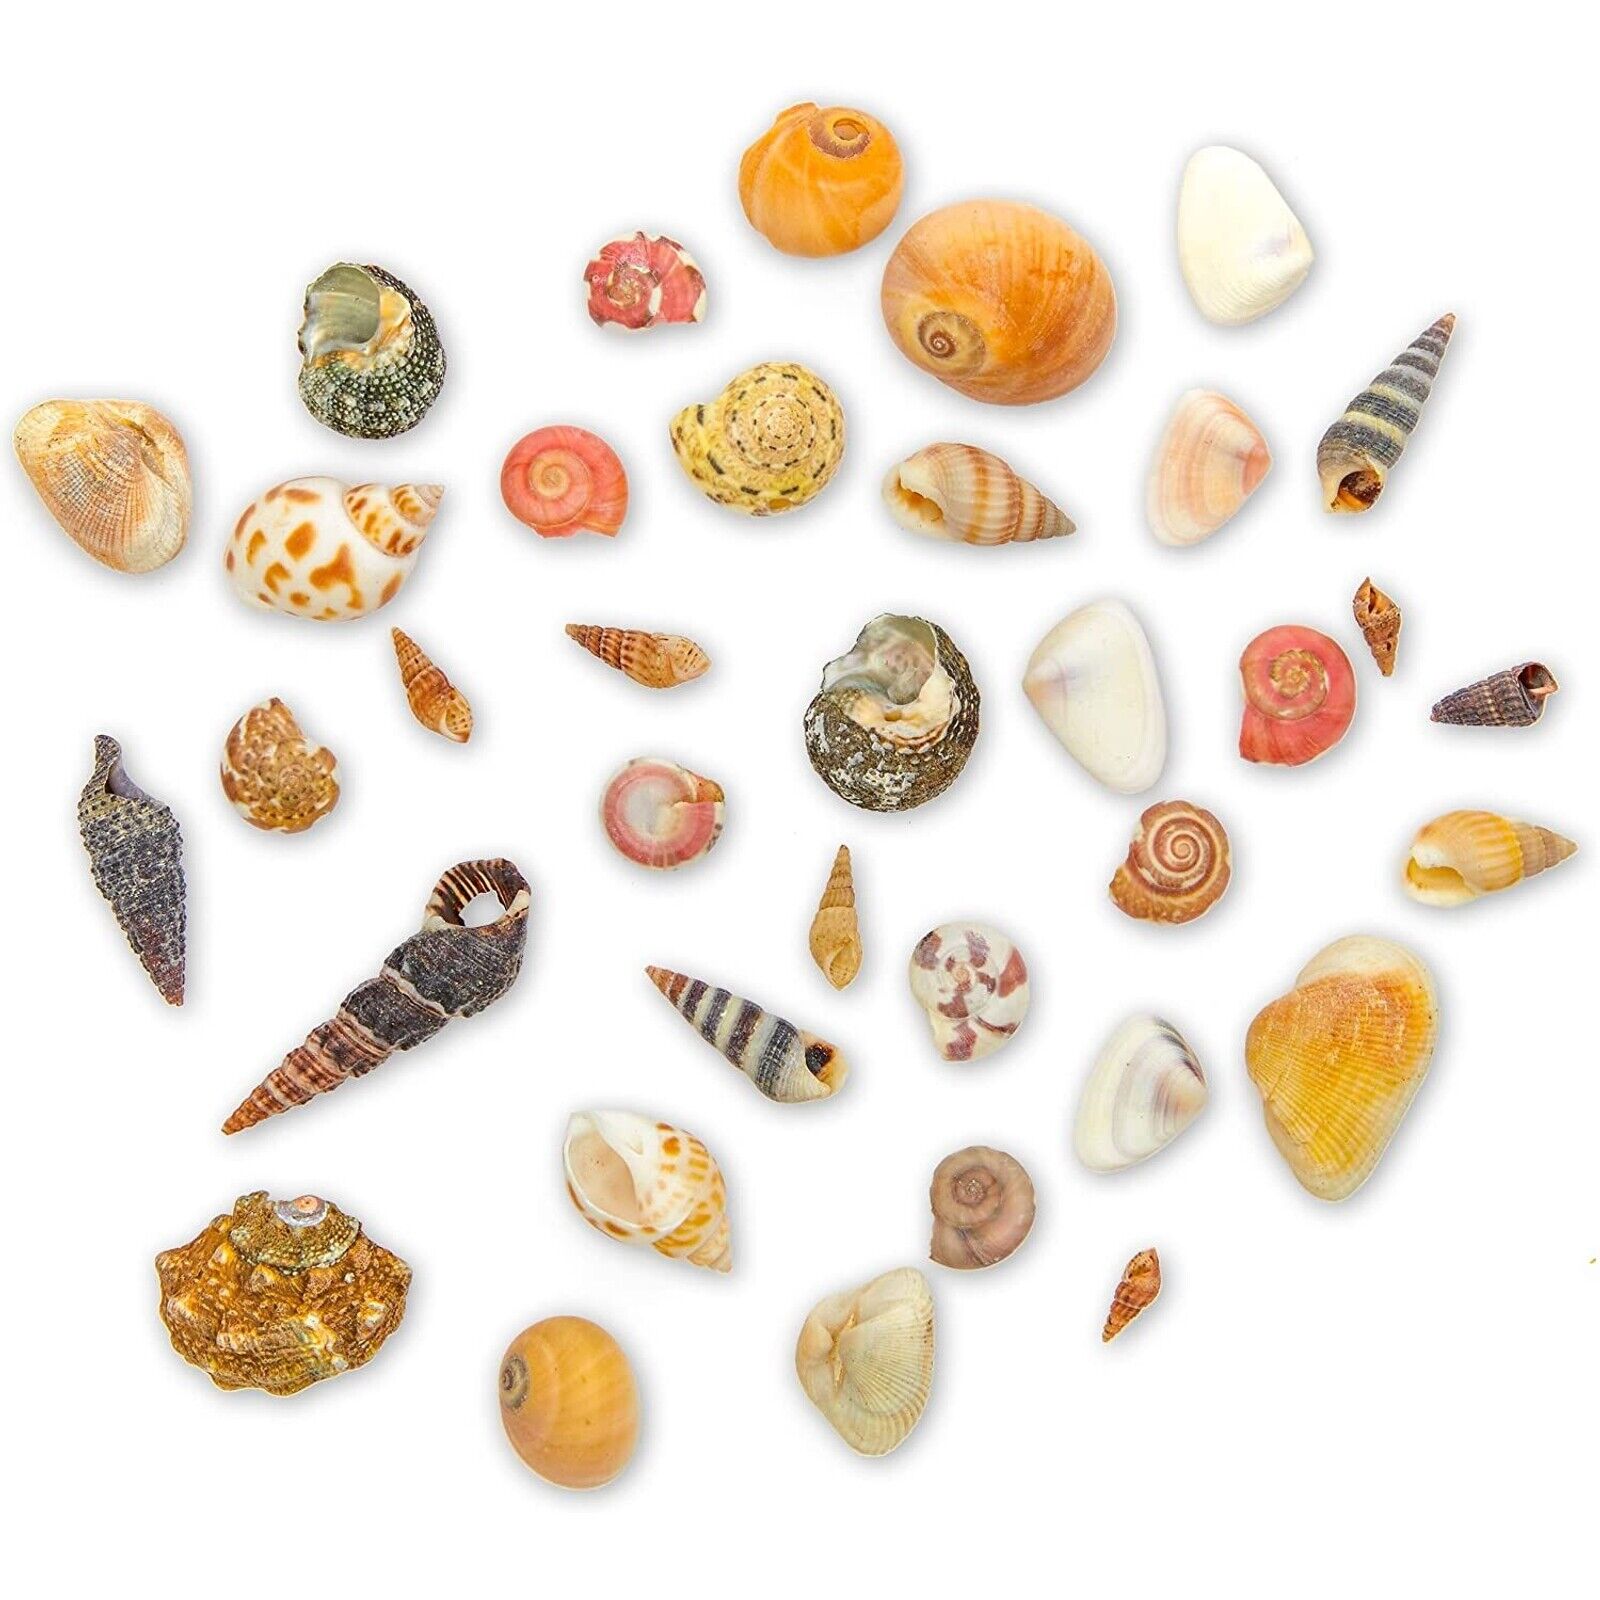 700 PCS Tiny Craft Spiral Seashell for DIY Art Home Sea Shells Decoration 0.4-1